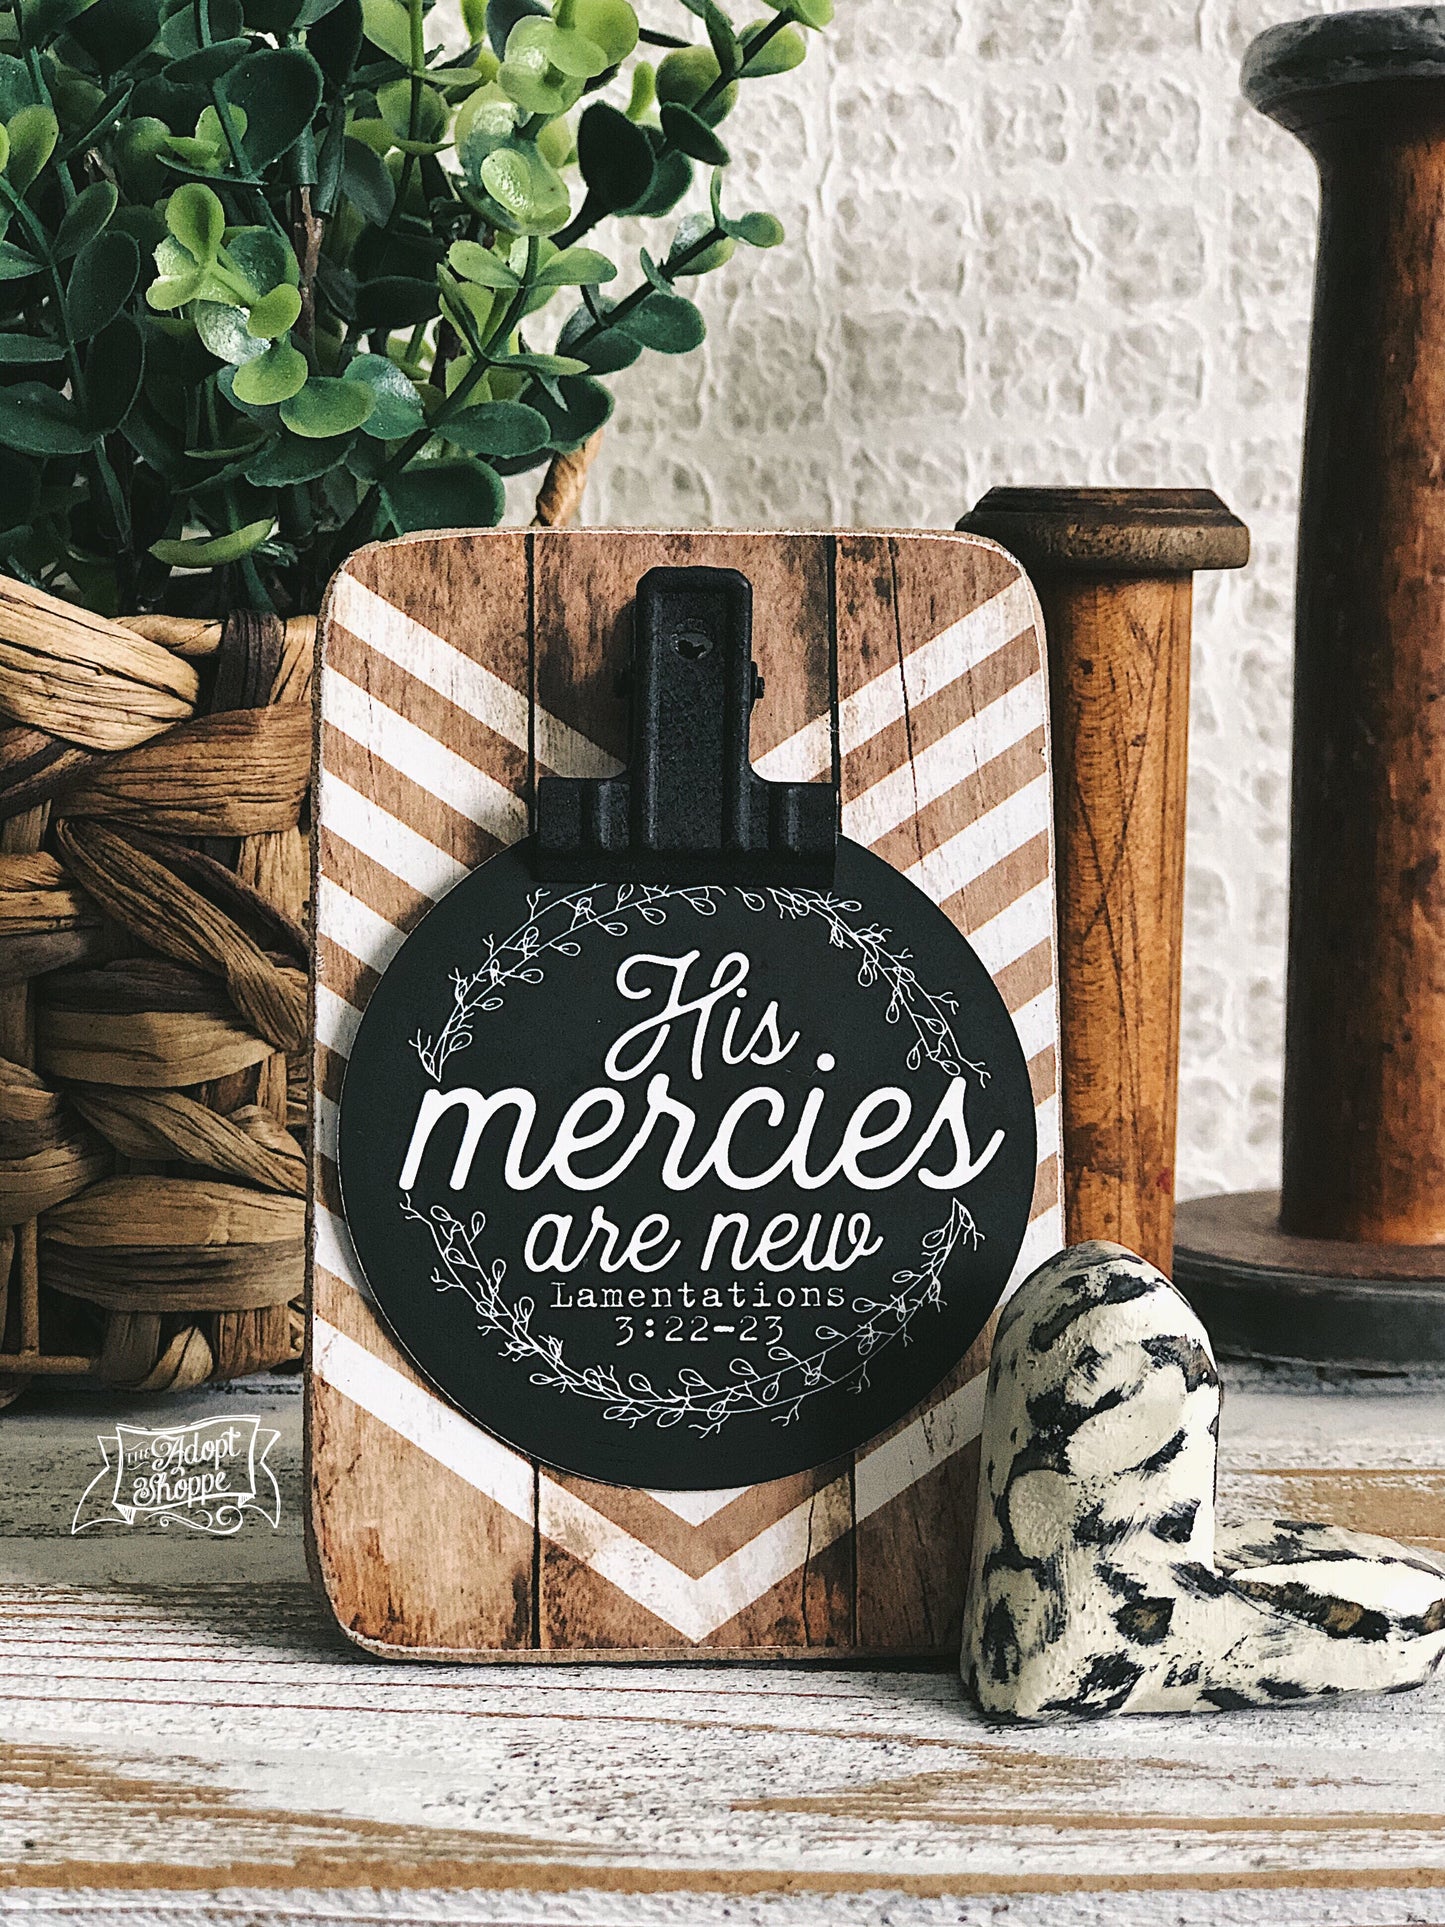 His mercies are new (Lamentations 3:22-23) #TheAdoptShoppecard